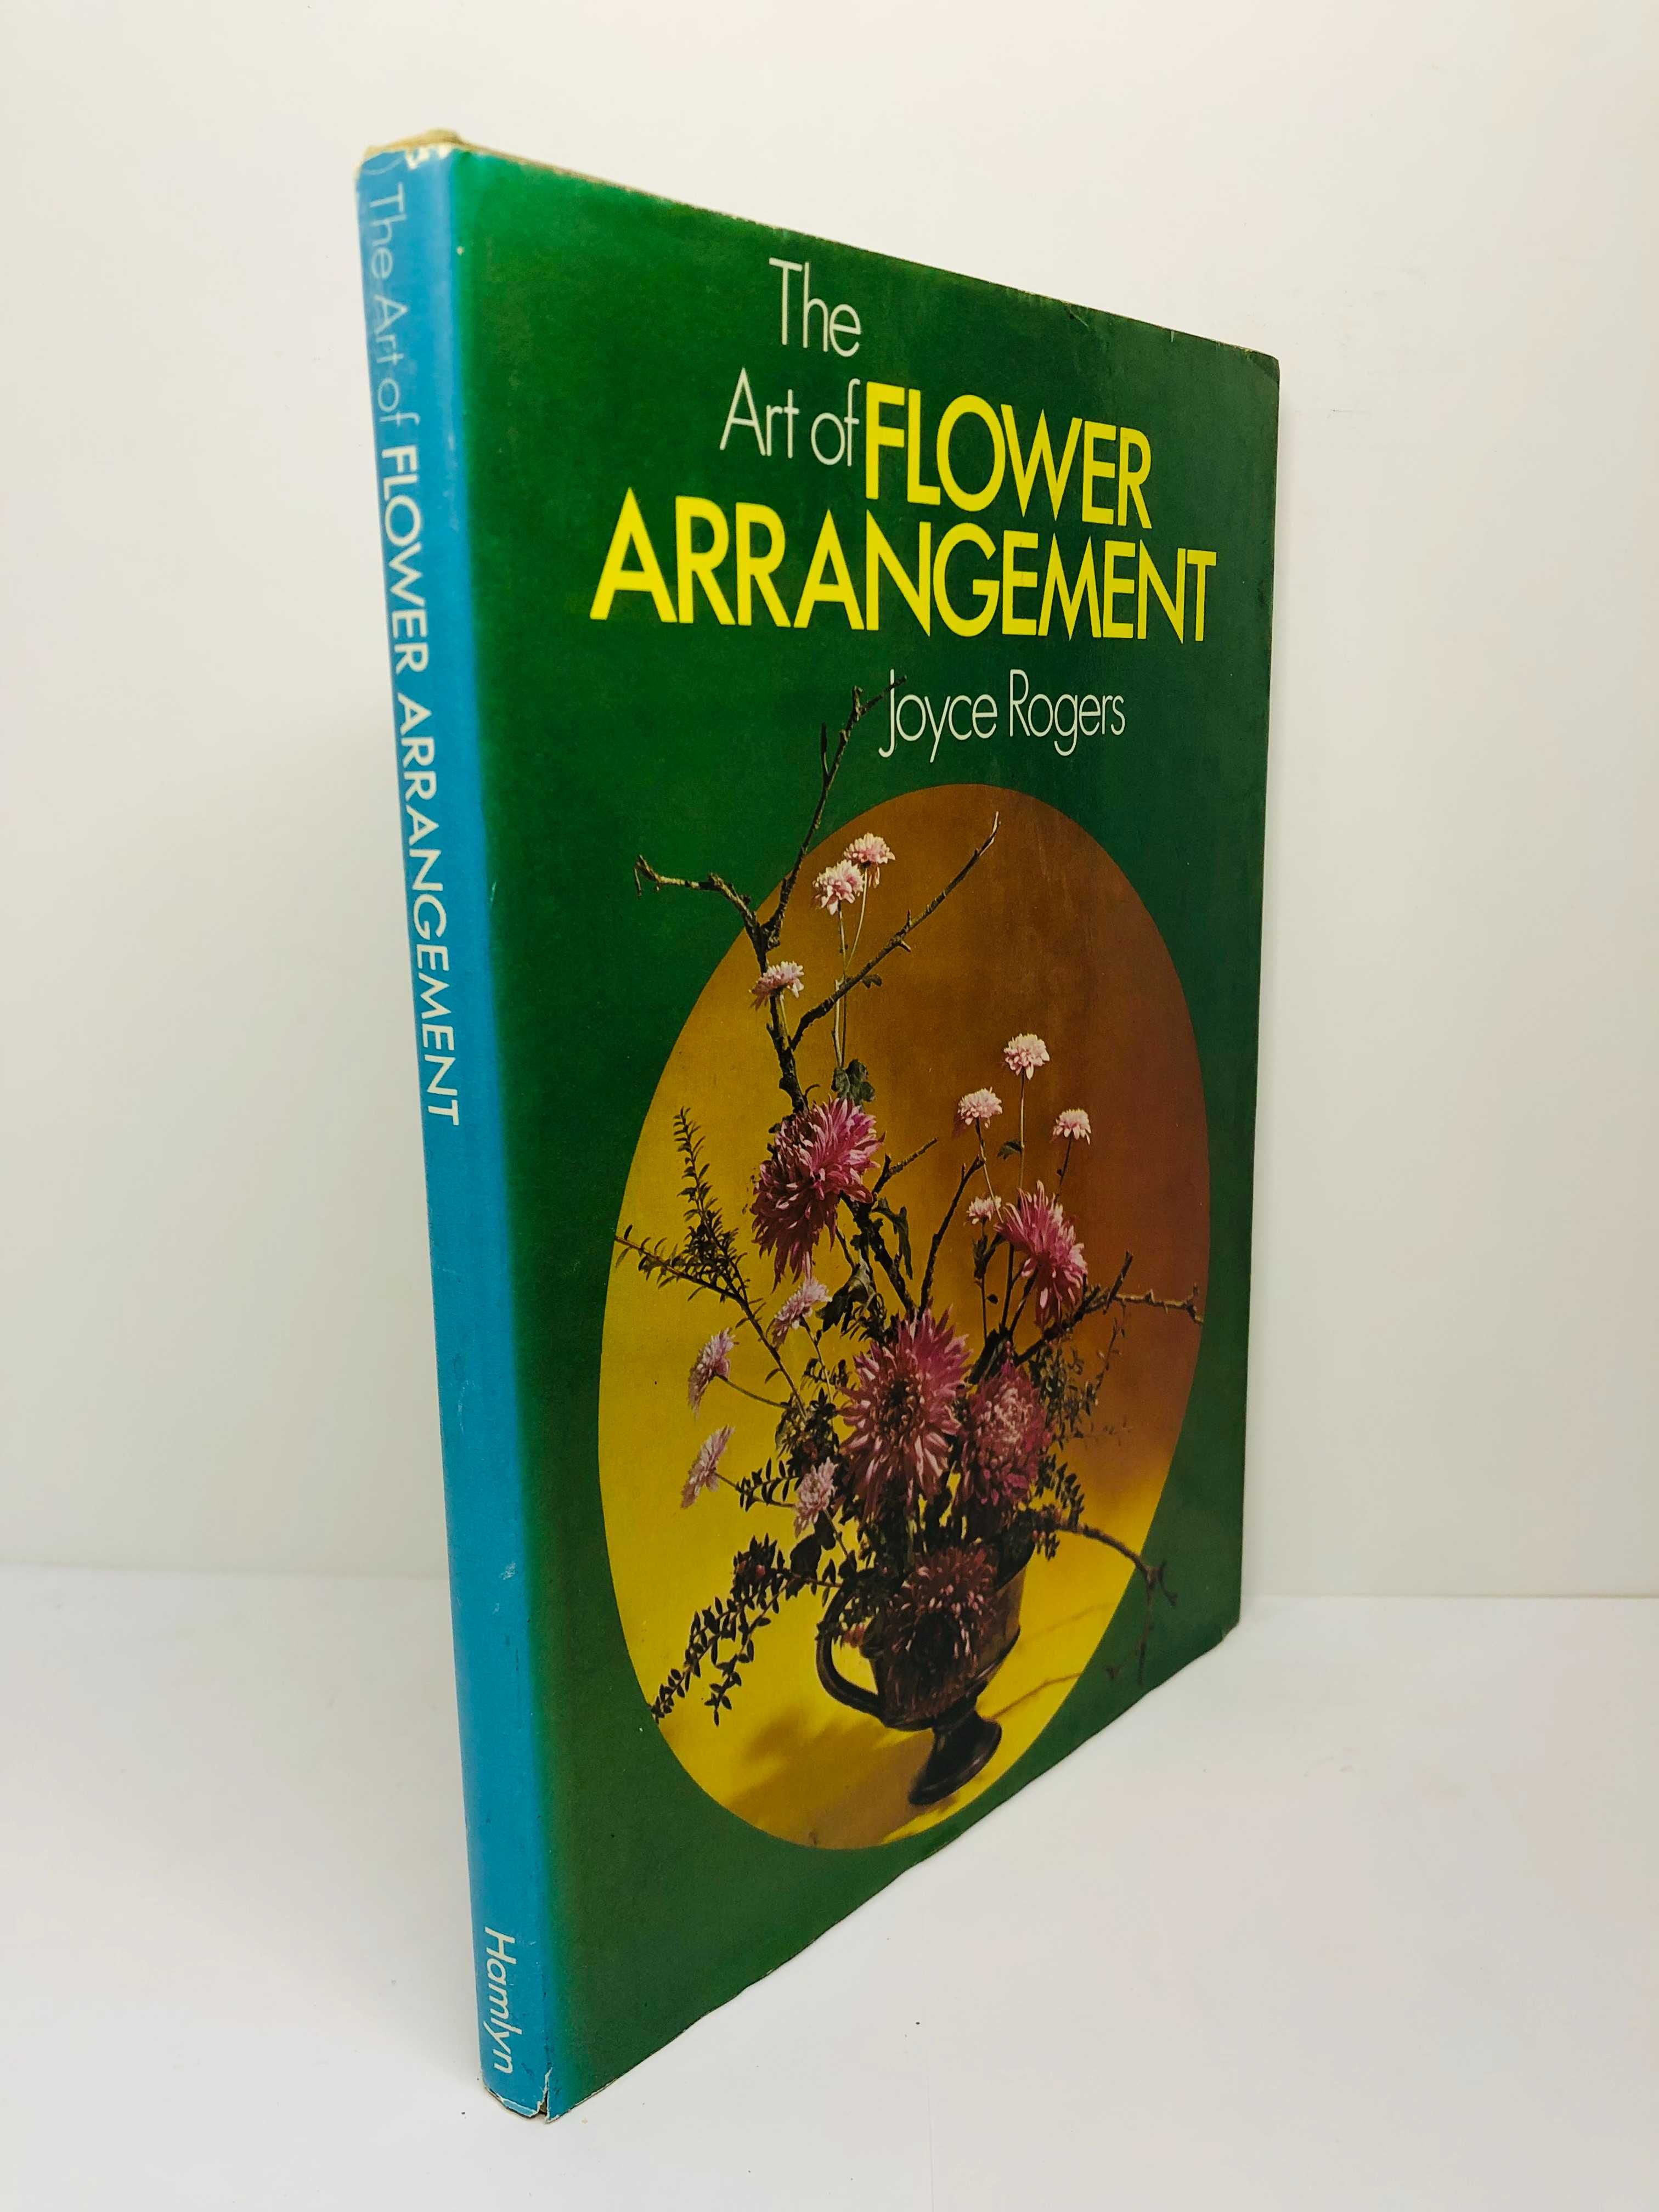 The Art of Flower Arrangement - Joyce Rogers